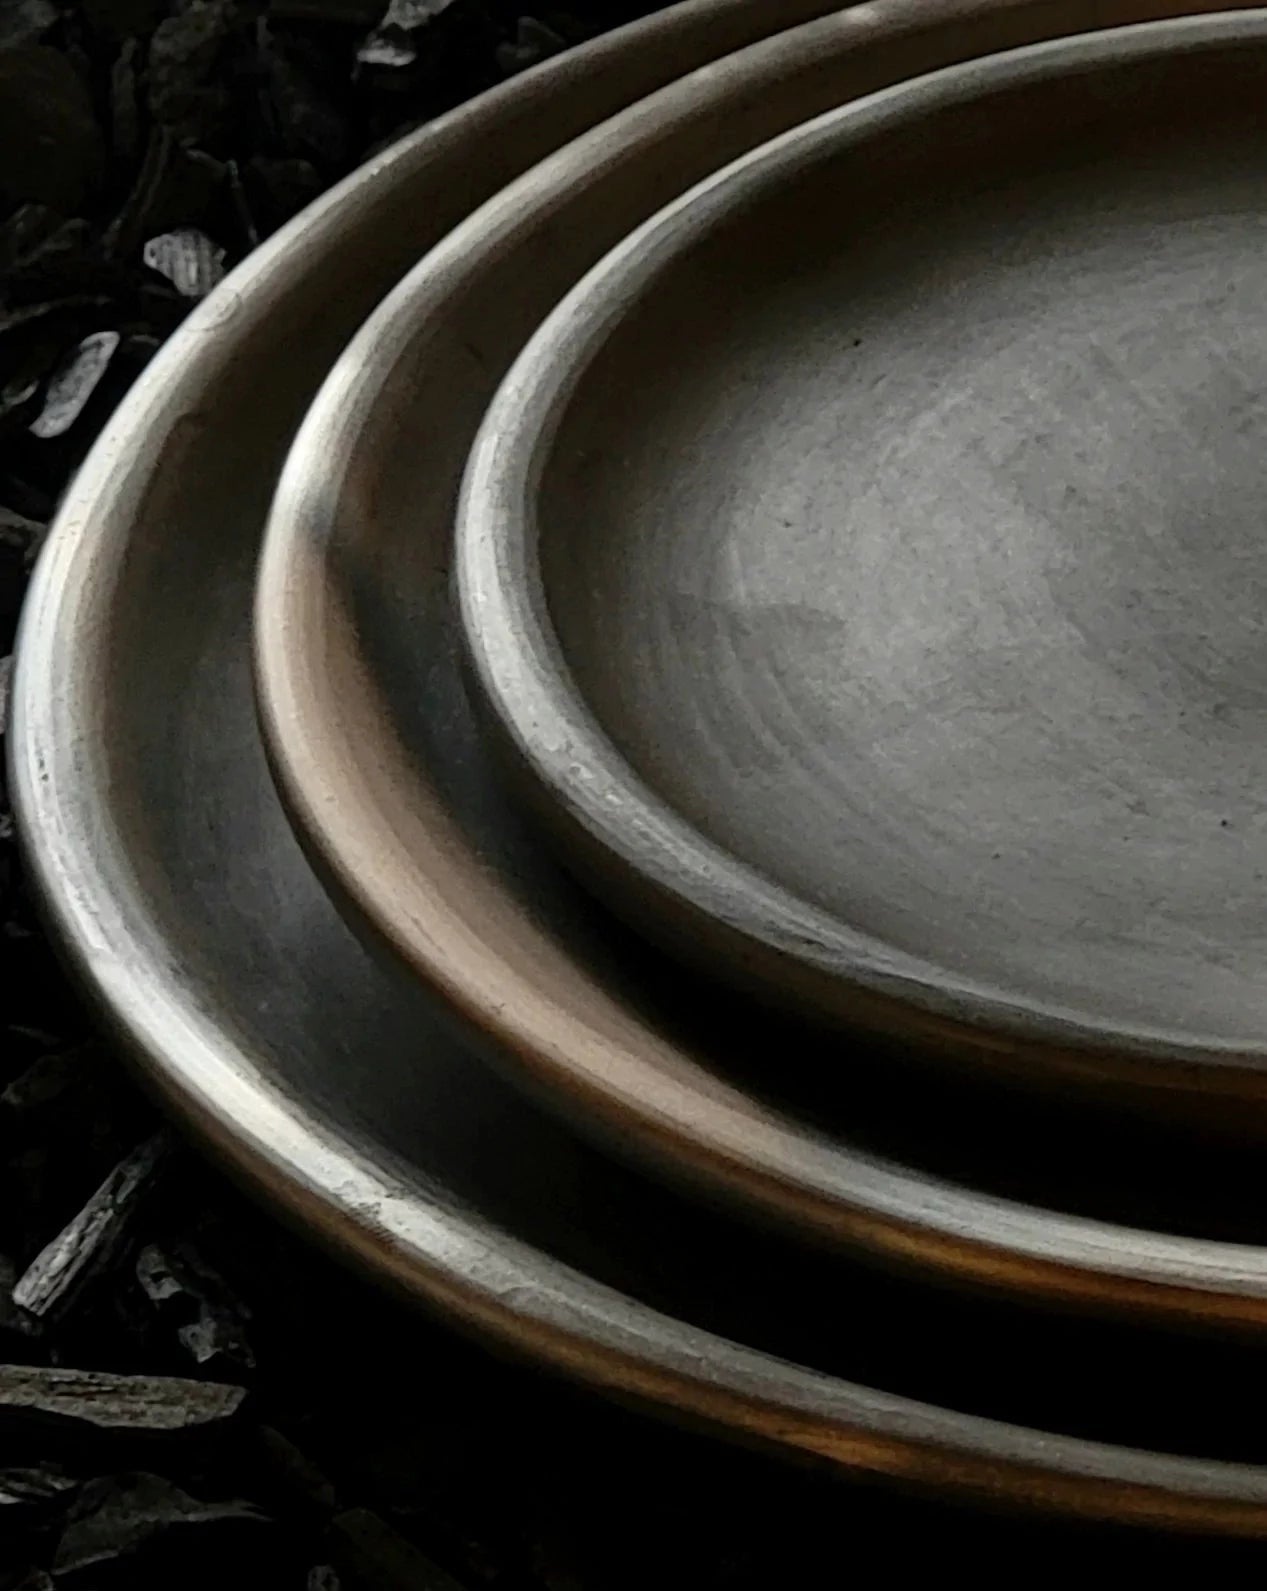 Oaxacan Pottery Plate Dinnerware Barro Negro 8”